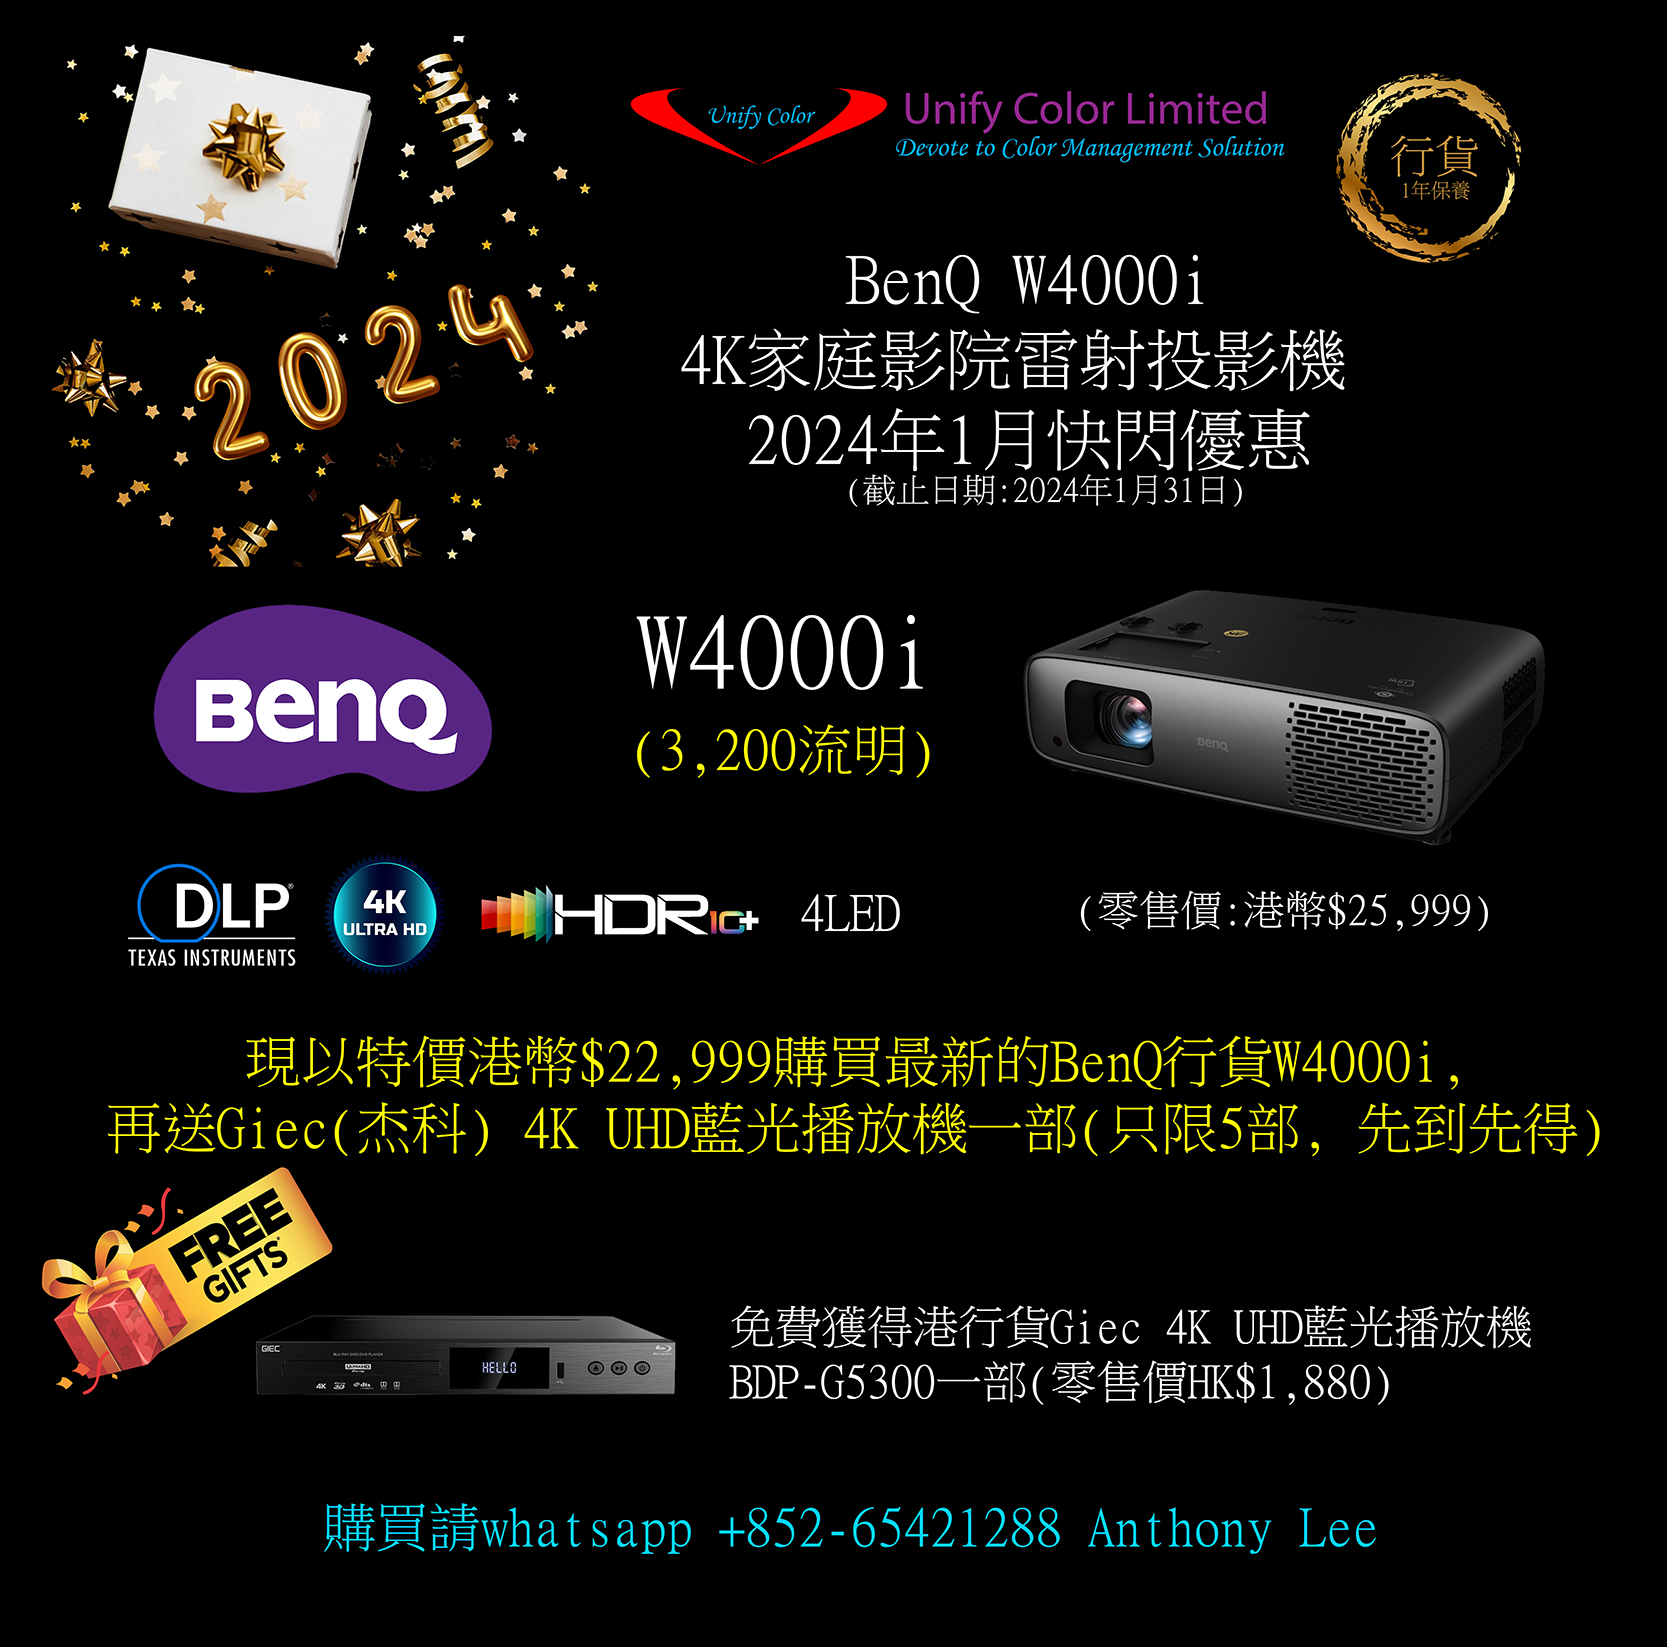 202401 W4000i promotion_BenQ_resize.jpg